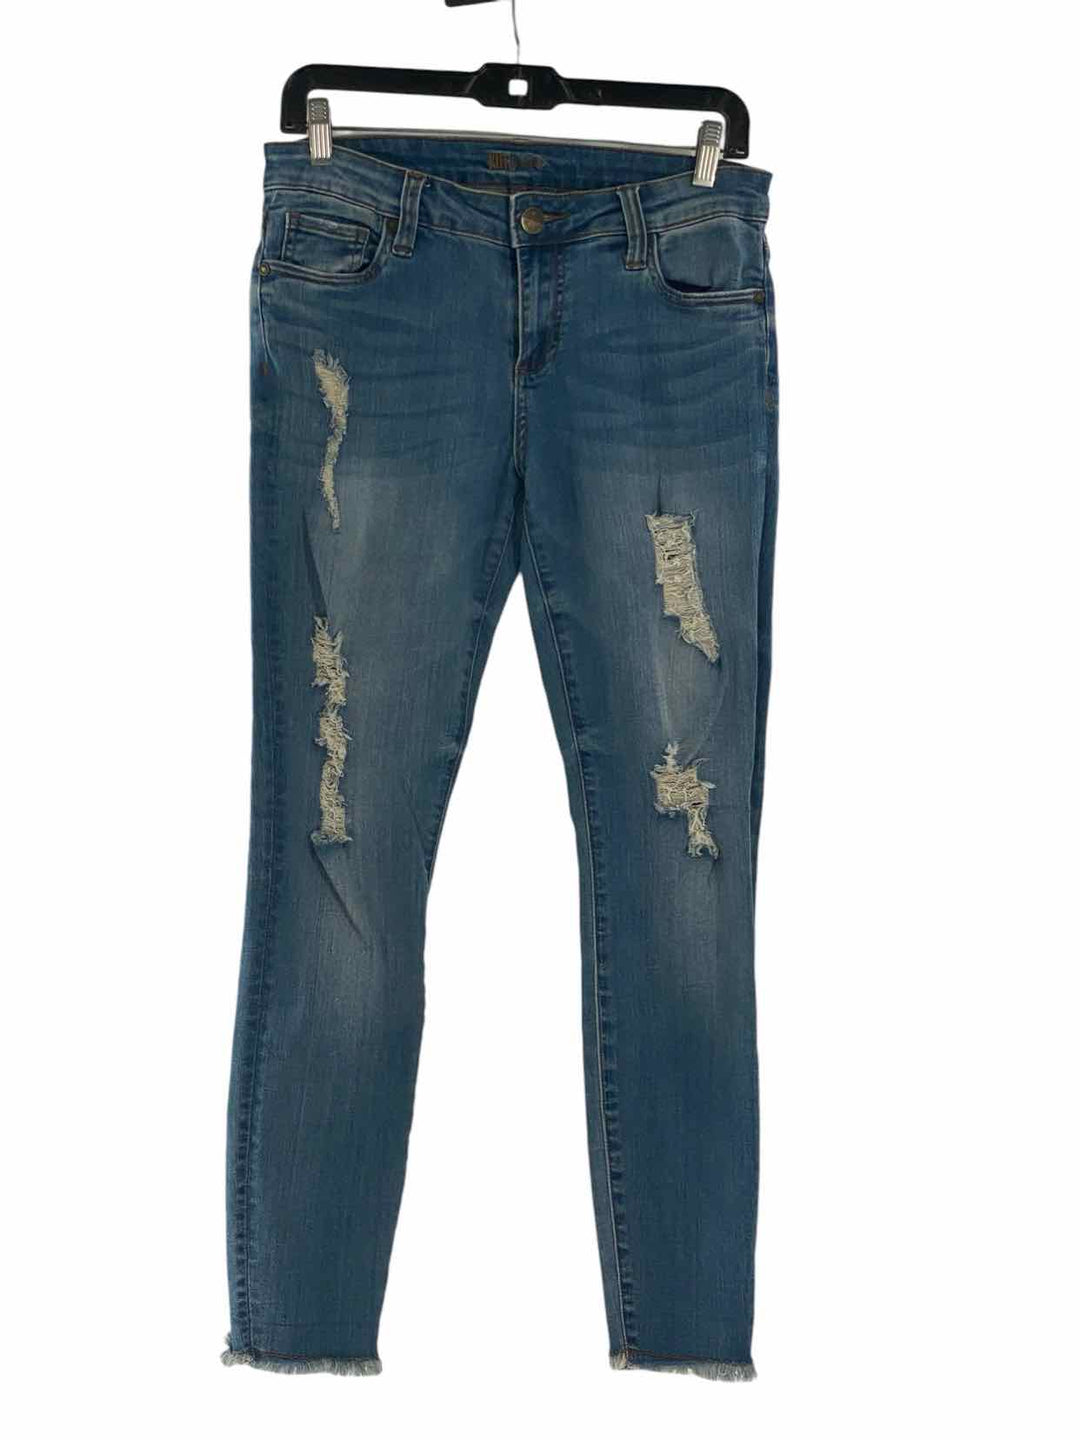 Kut Size S Medium wash Jeans